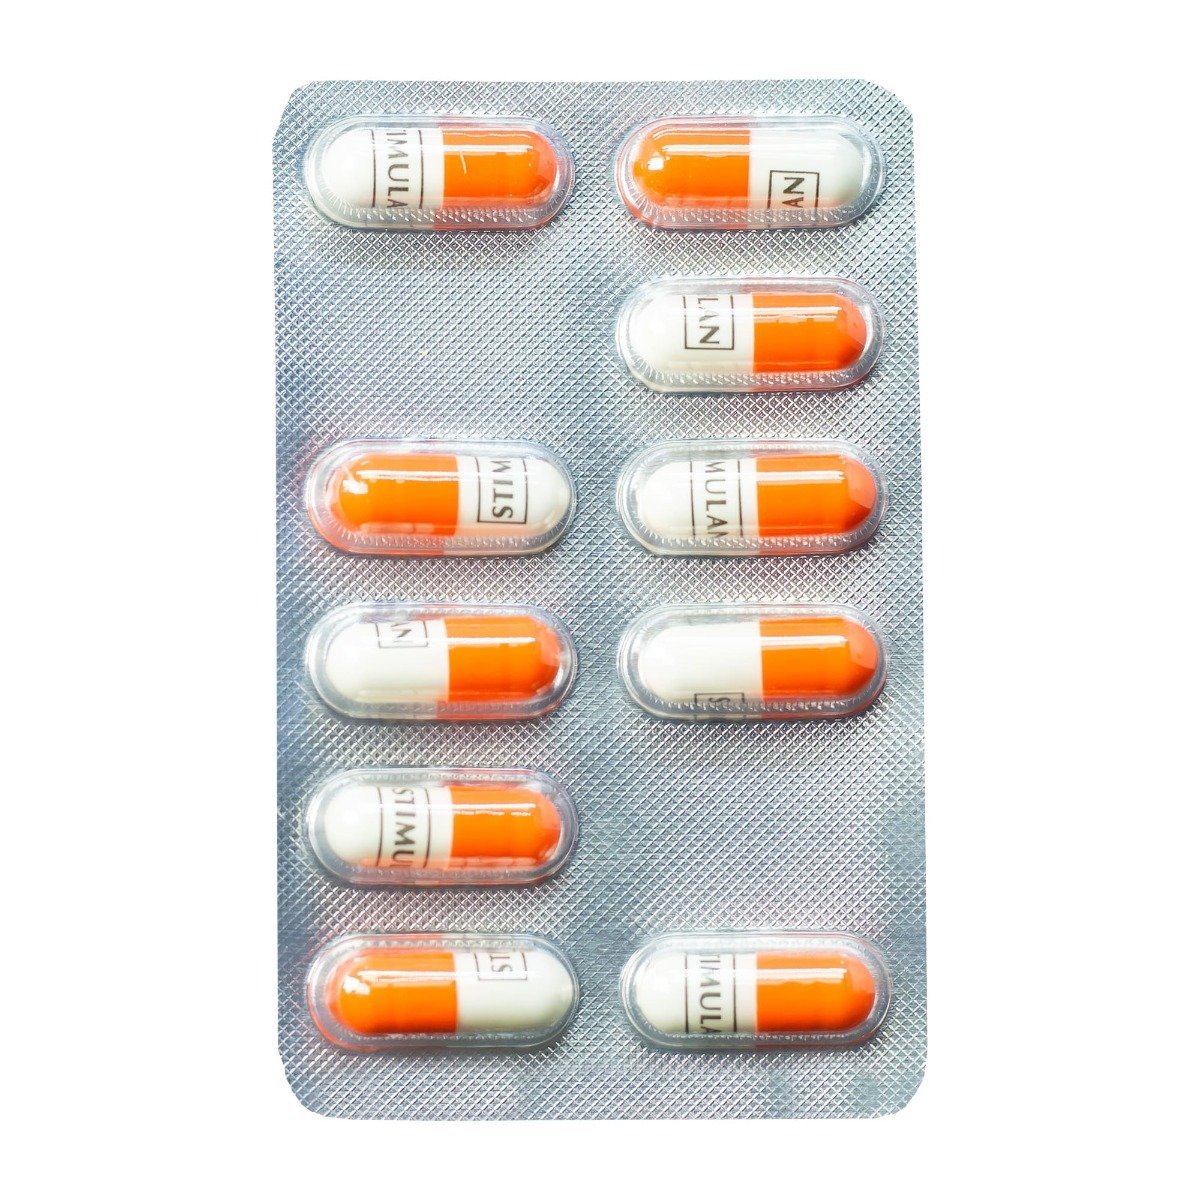 Stimulan 400 mg - 30 Capsules - Bloom Pharmacy